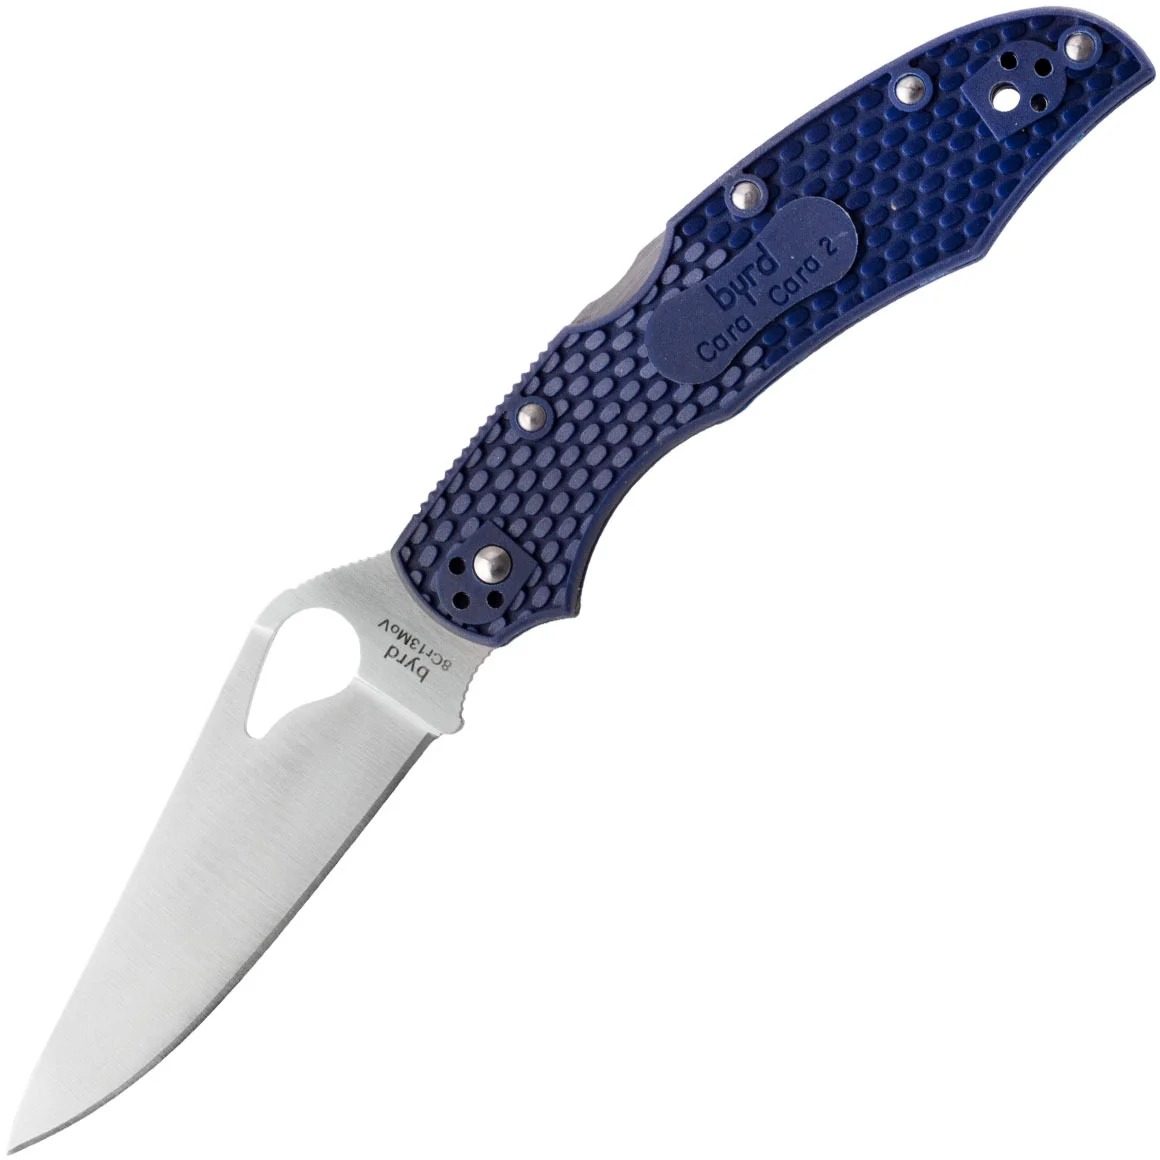 Nůž Spyderco Spyderco Byrd Cara Cara 2 Lightweight - modrý